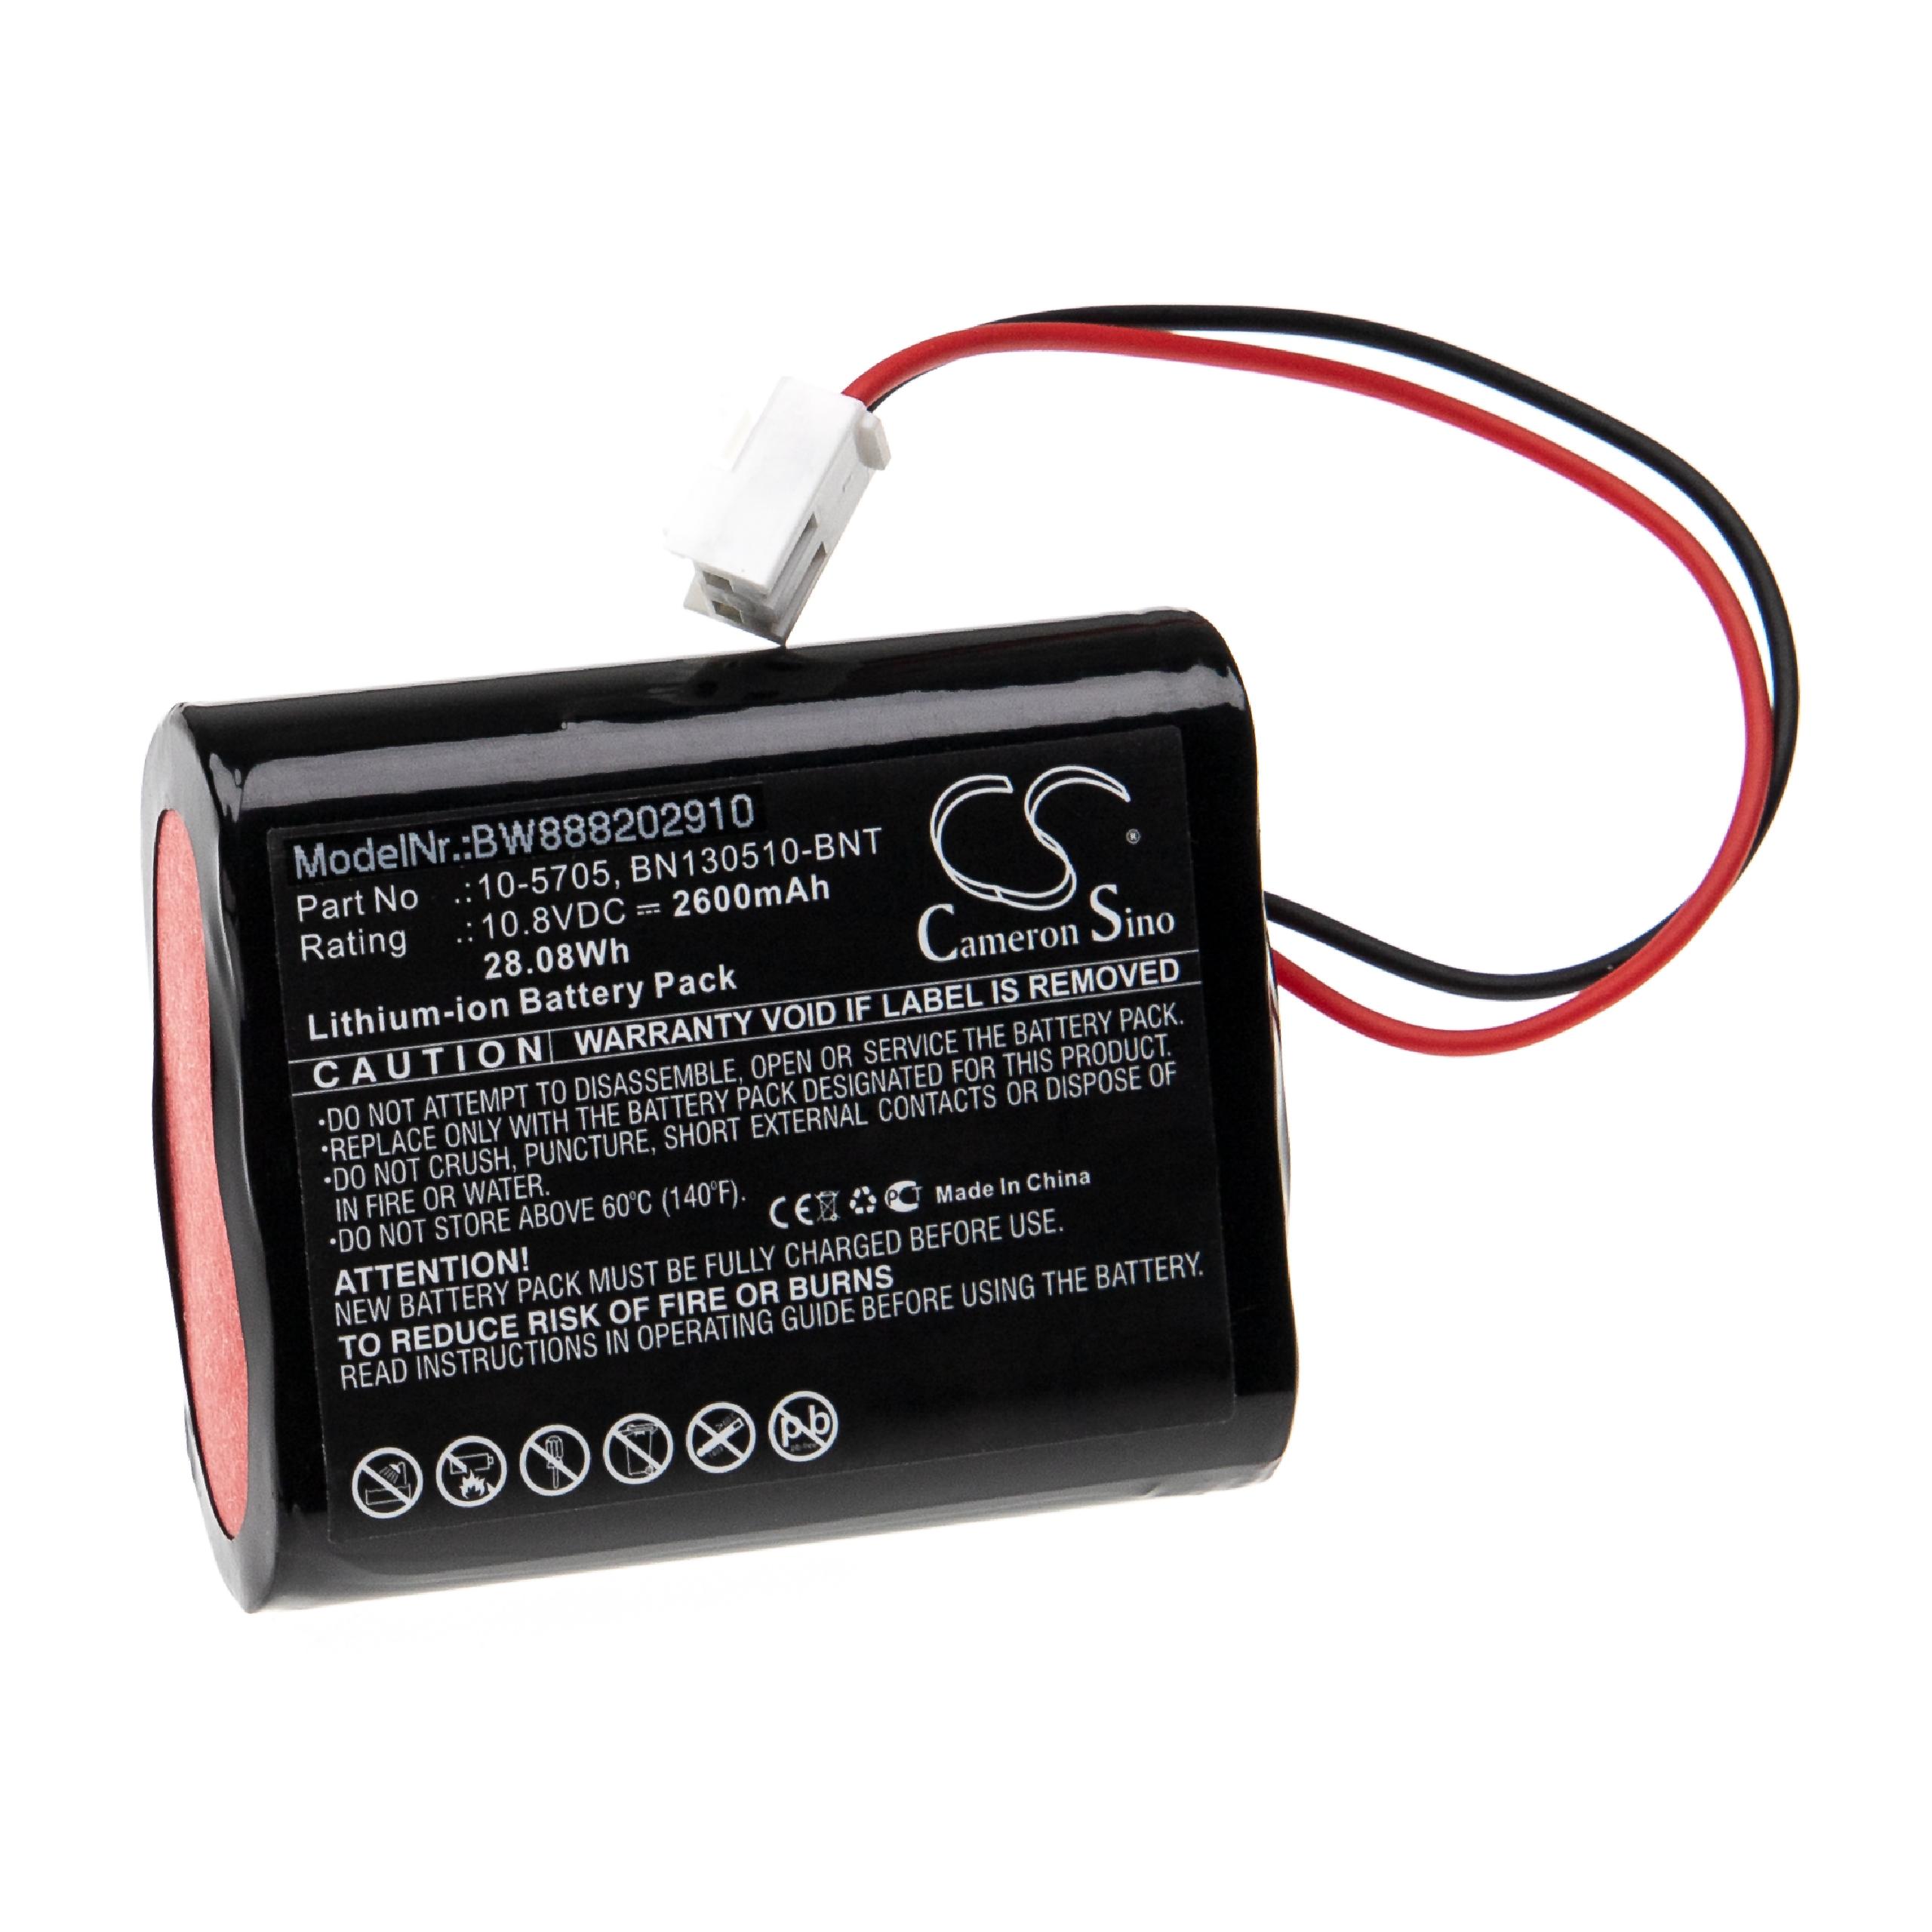 Batería reemplaza Bionet 10-5705, BN130510-BNT, ICR18650 22F-031PPTC para tecnología médica - 2600 mAh, 10,8 V